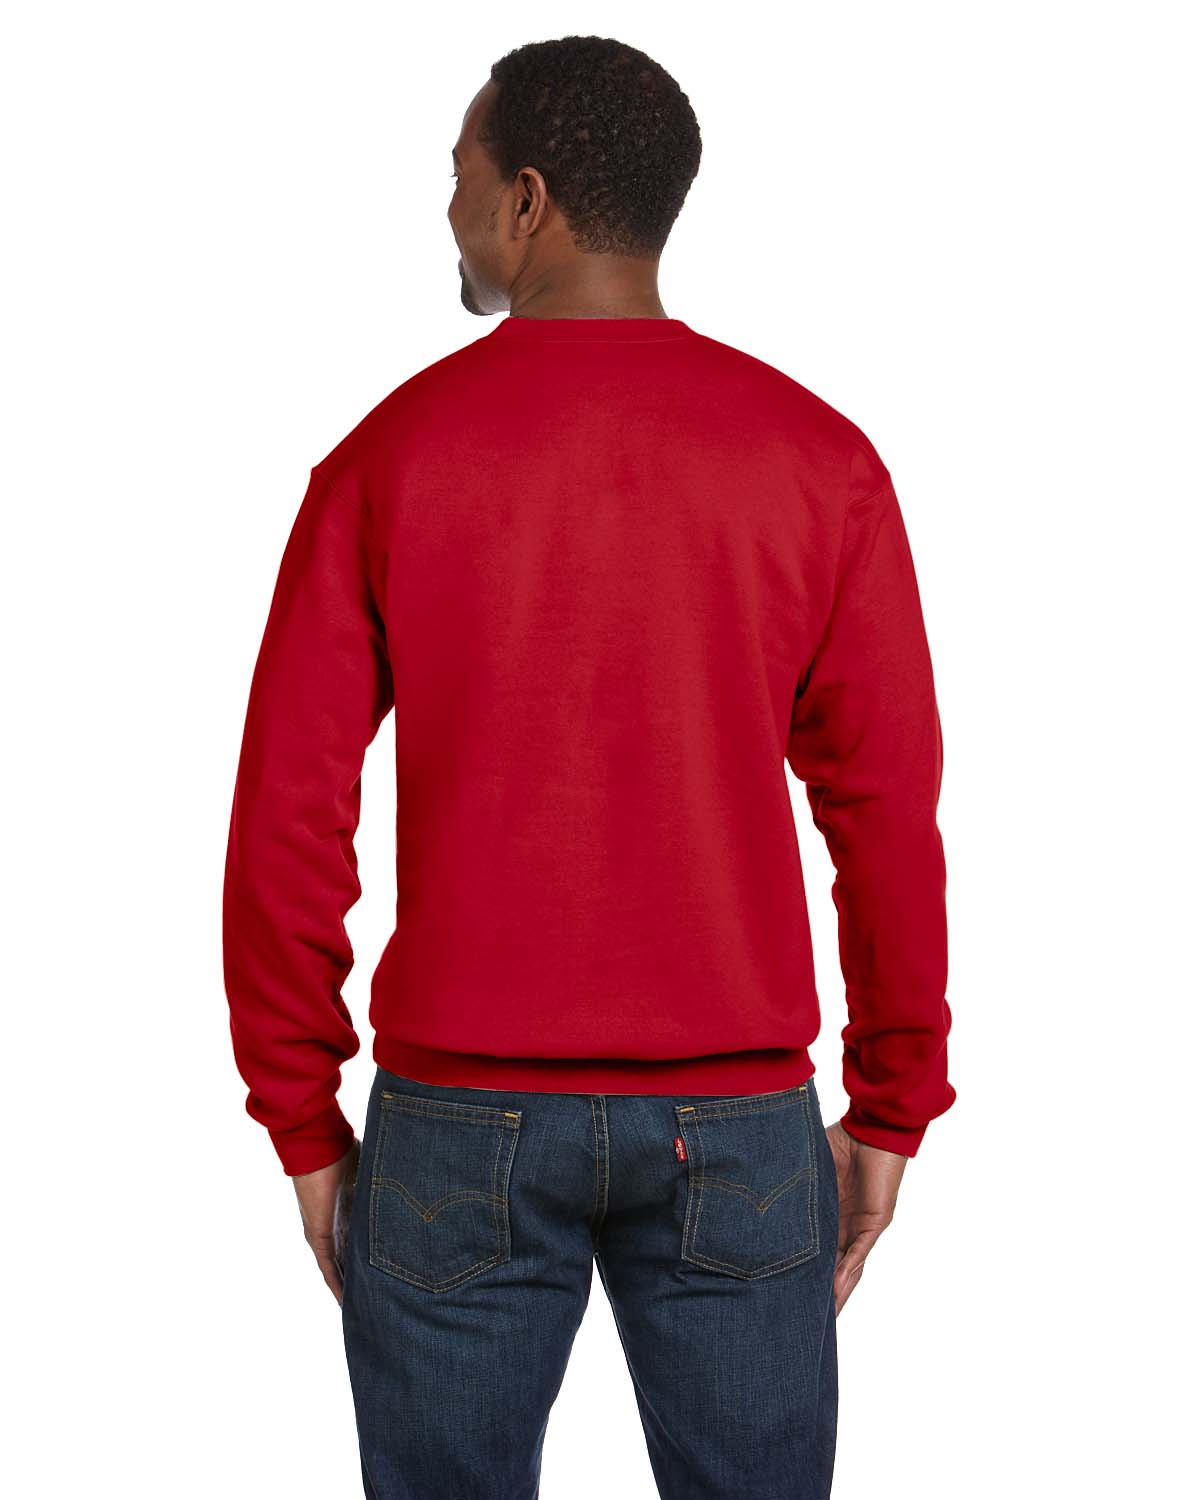 Gildan Mens Sweatshirt Premium Cotton Ringspun 9 oz Crew Neck S-3XL ...